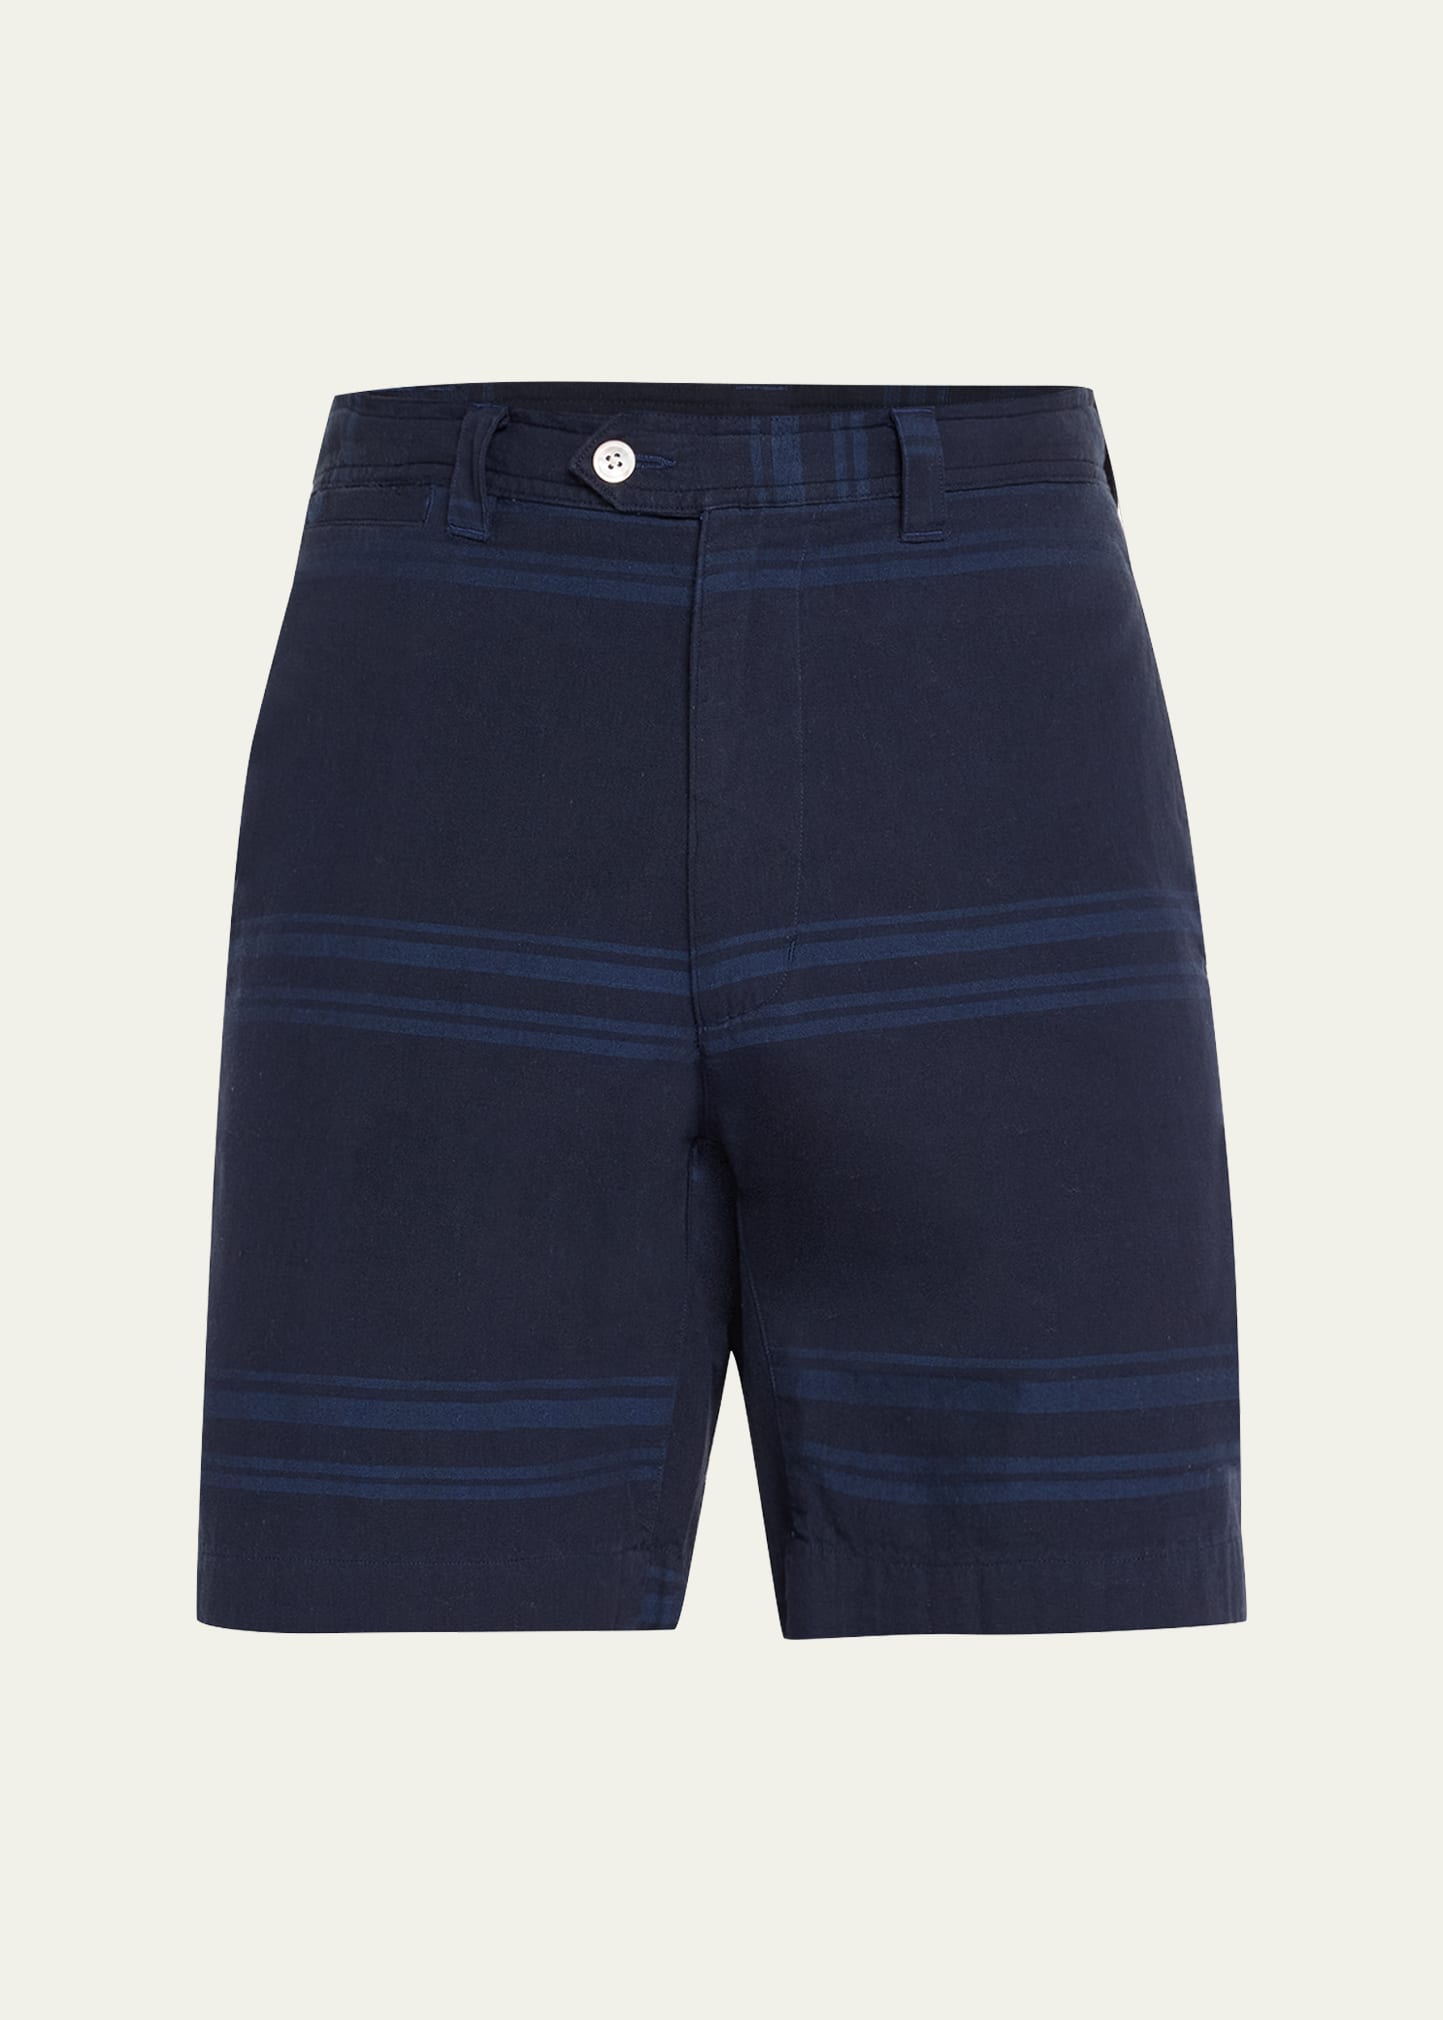 Men's Tonal Madras Shorts